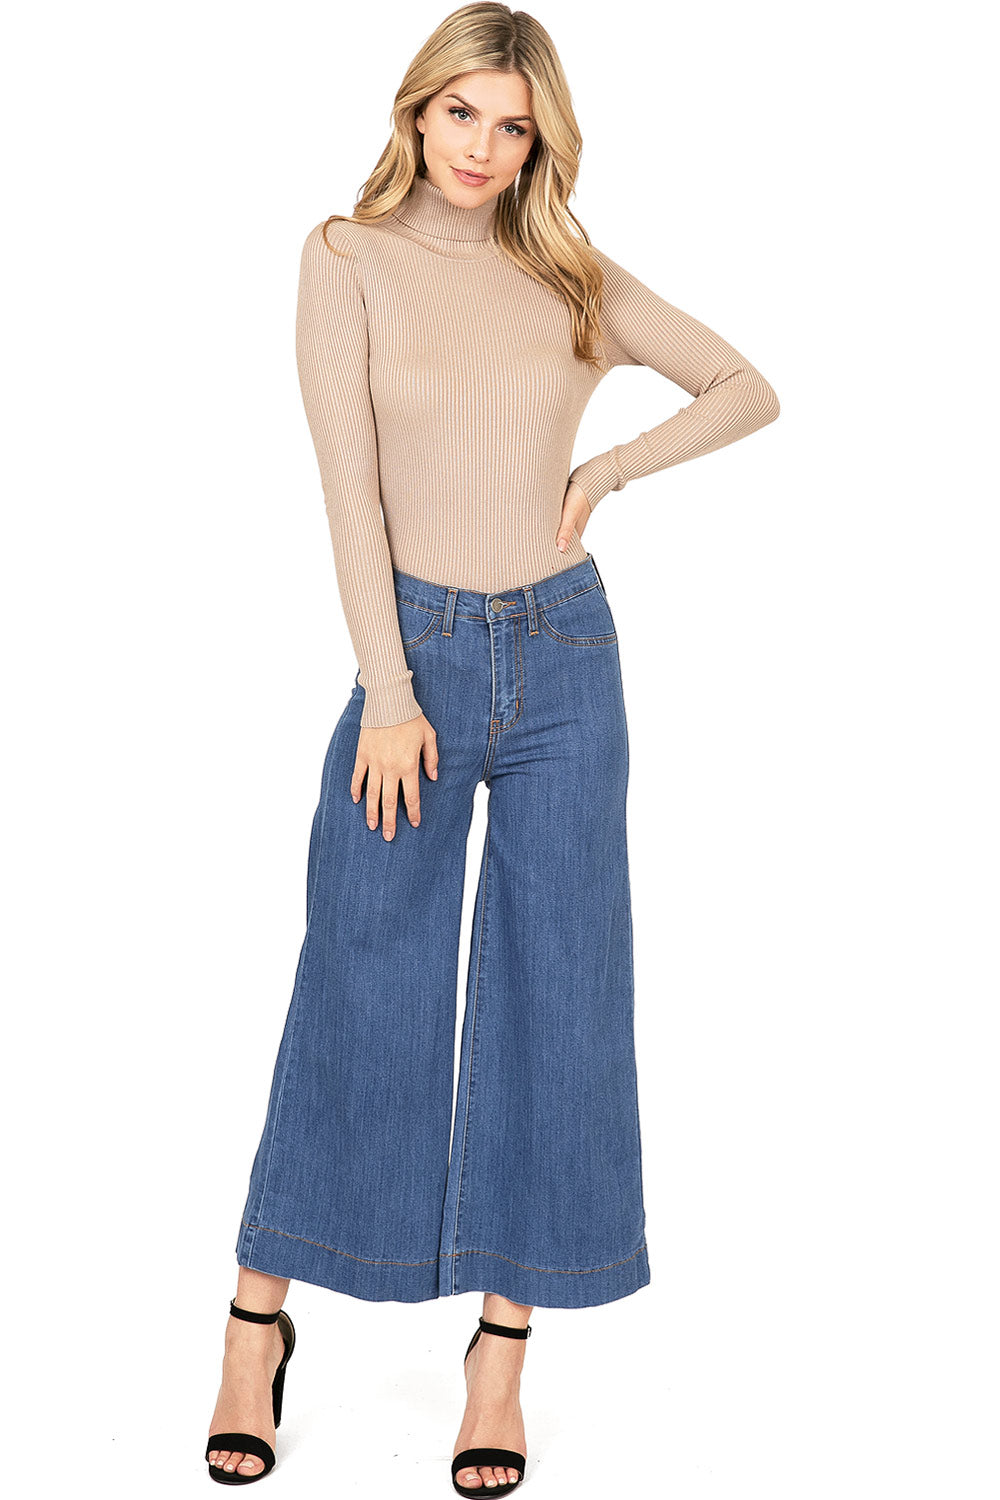 Women Denim Culottes Jeans Flared Wide Leg Drawstring High Waist Pants  Trousers | eBay